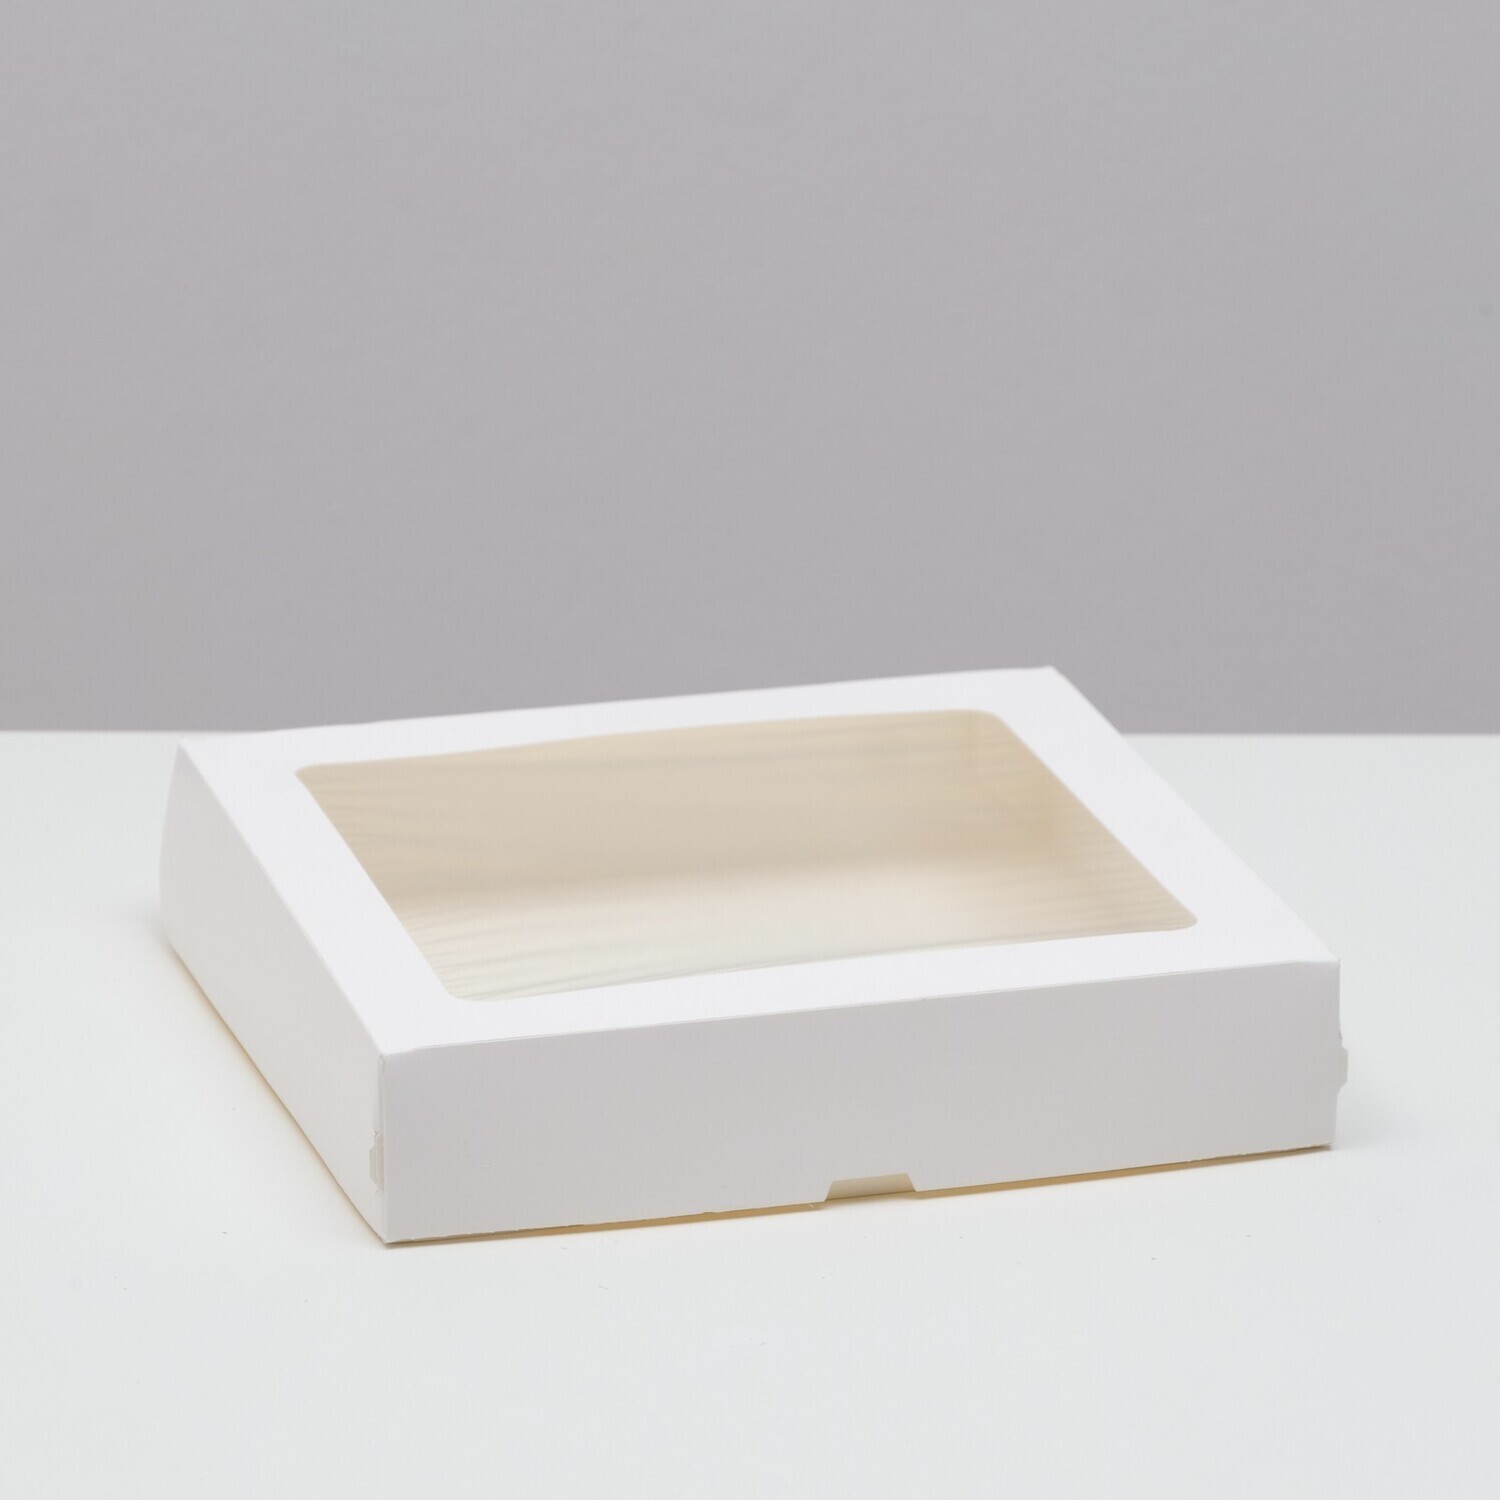 Коробка складная, с окном, белая, 24 х 24 х 5 см